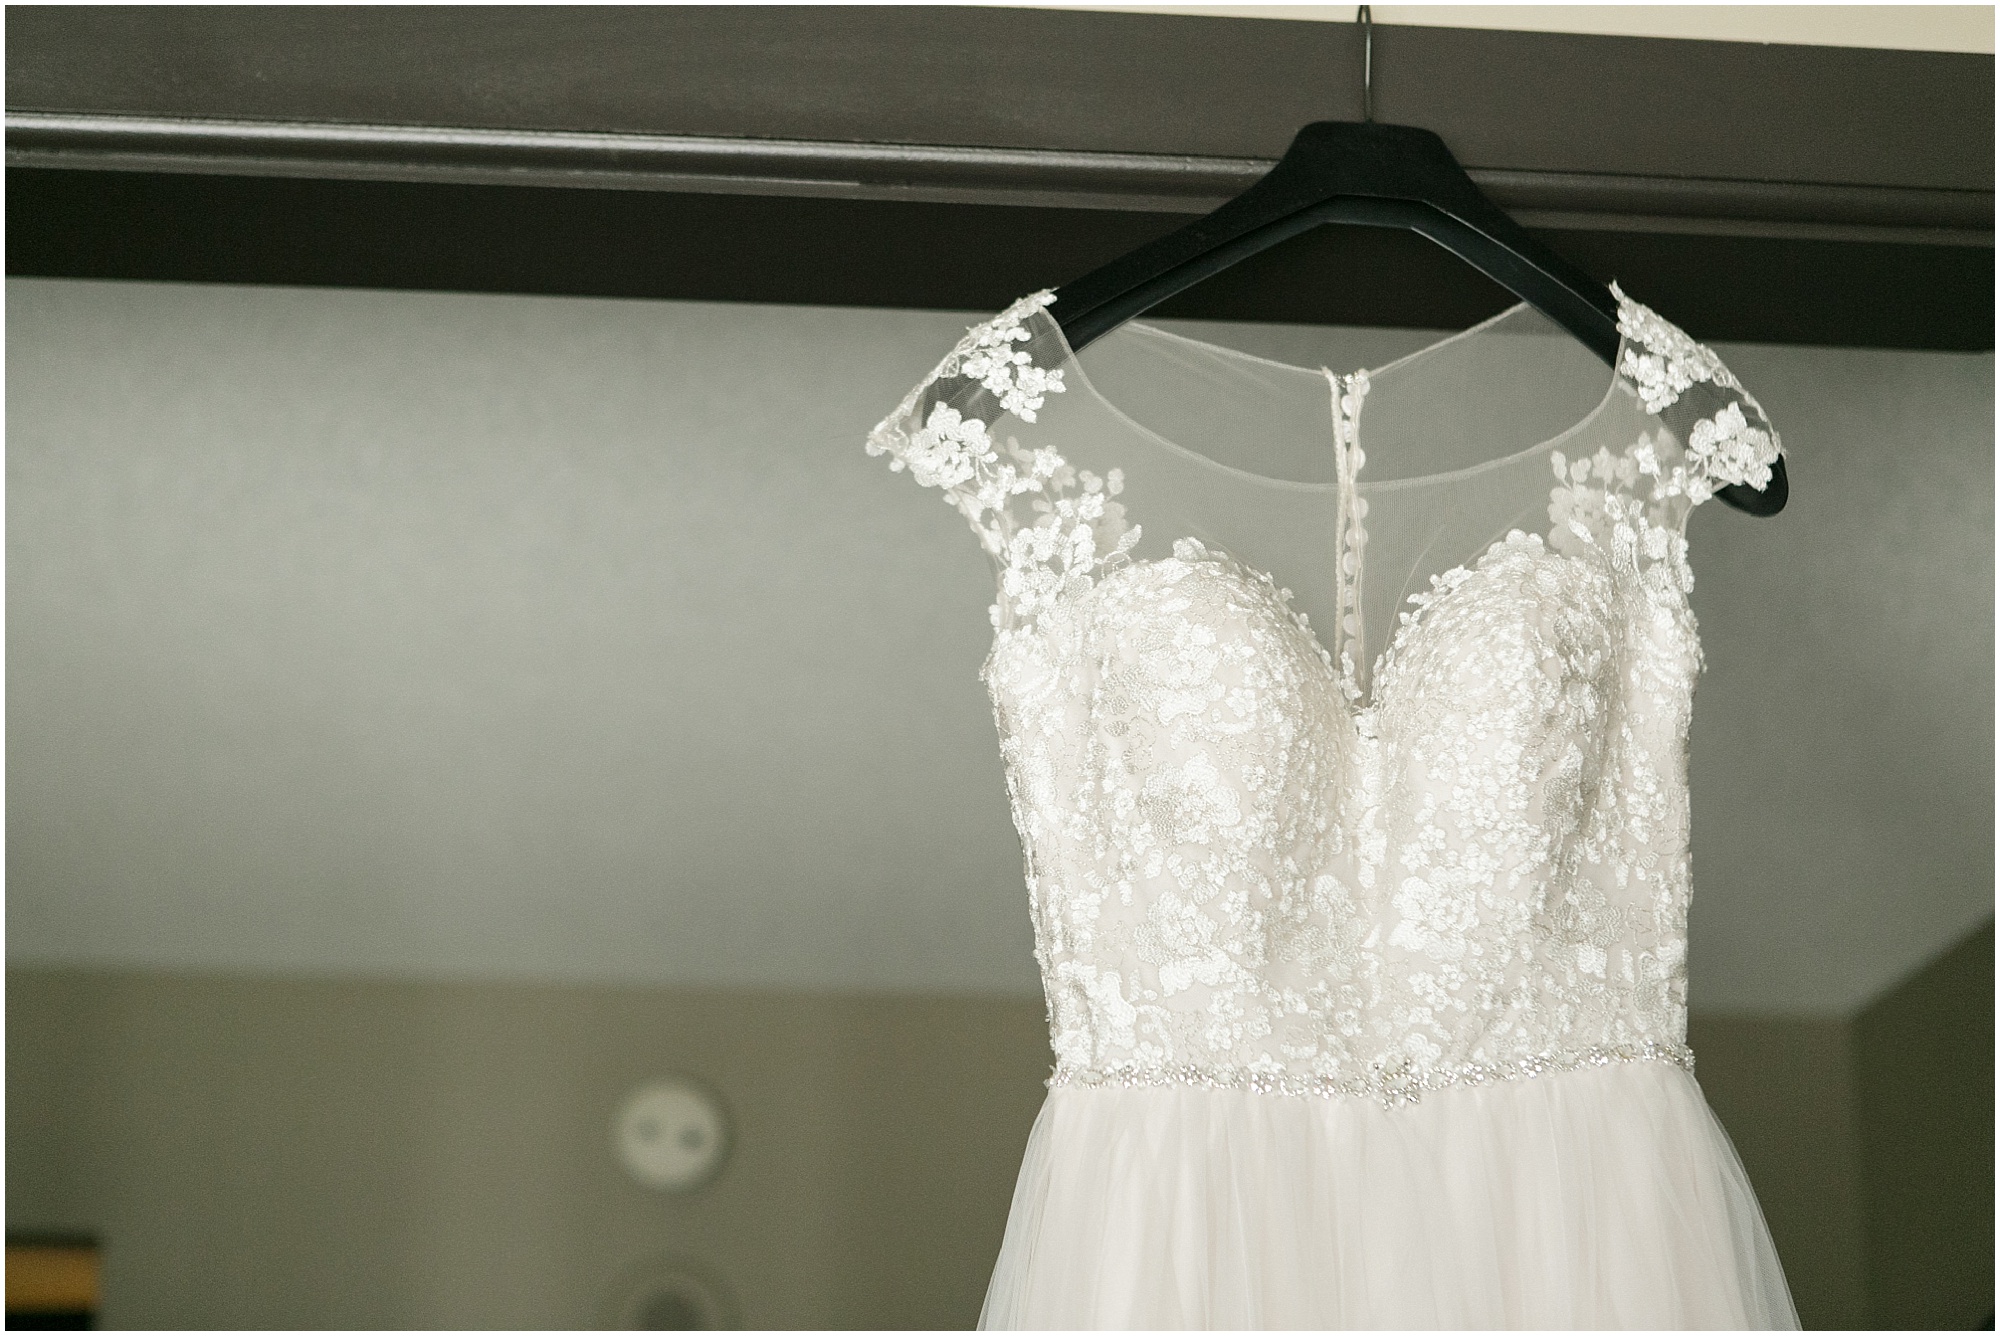 Close up of the bride's vintage wedding dress.